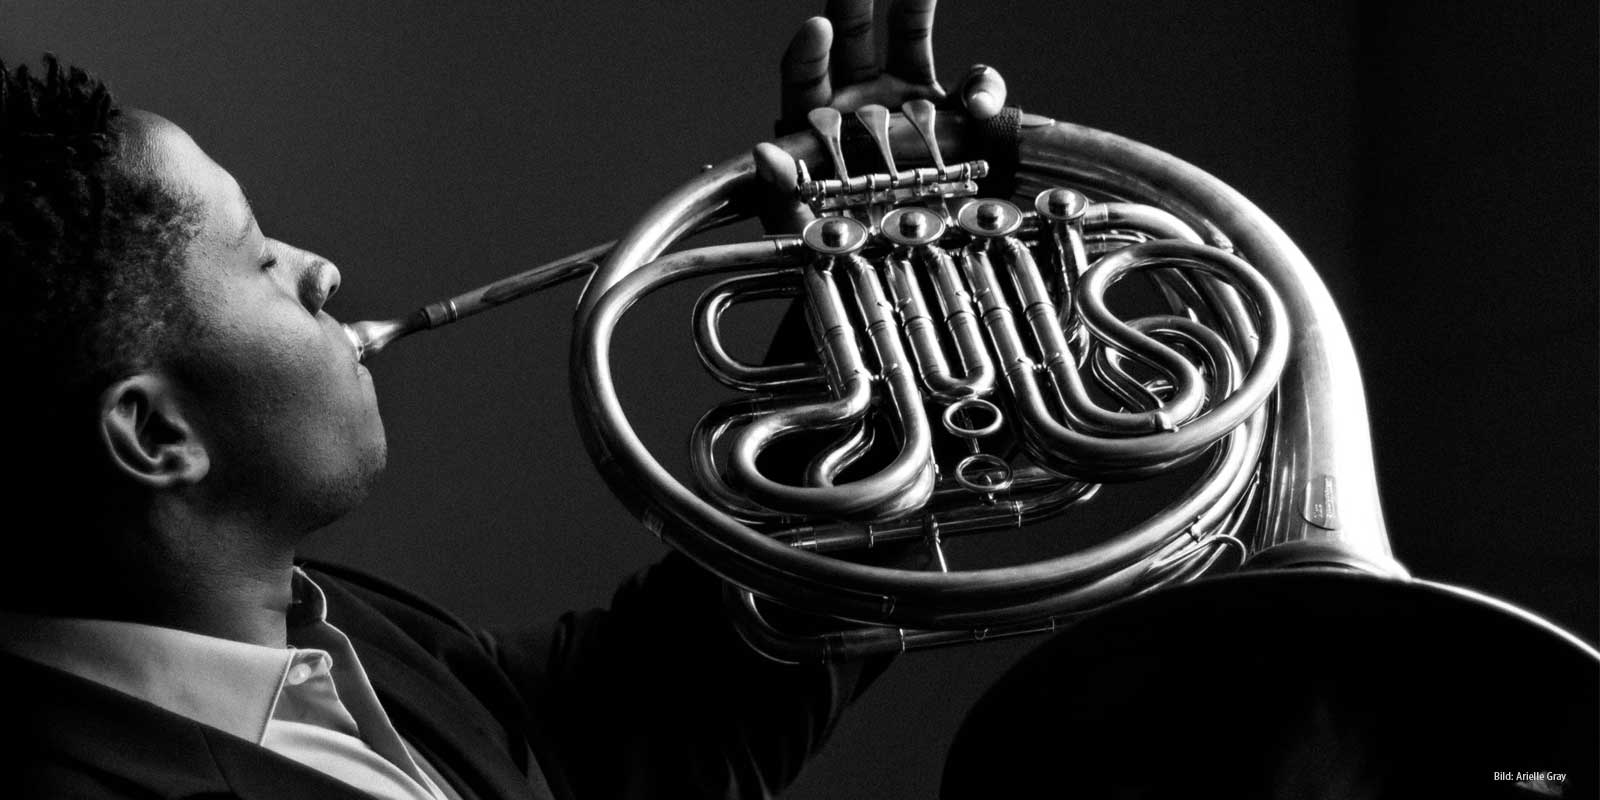 modell chicago josh williams schmiedhaeuser orchestral horns germany